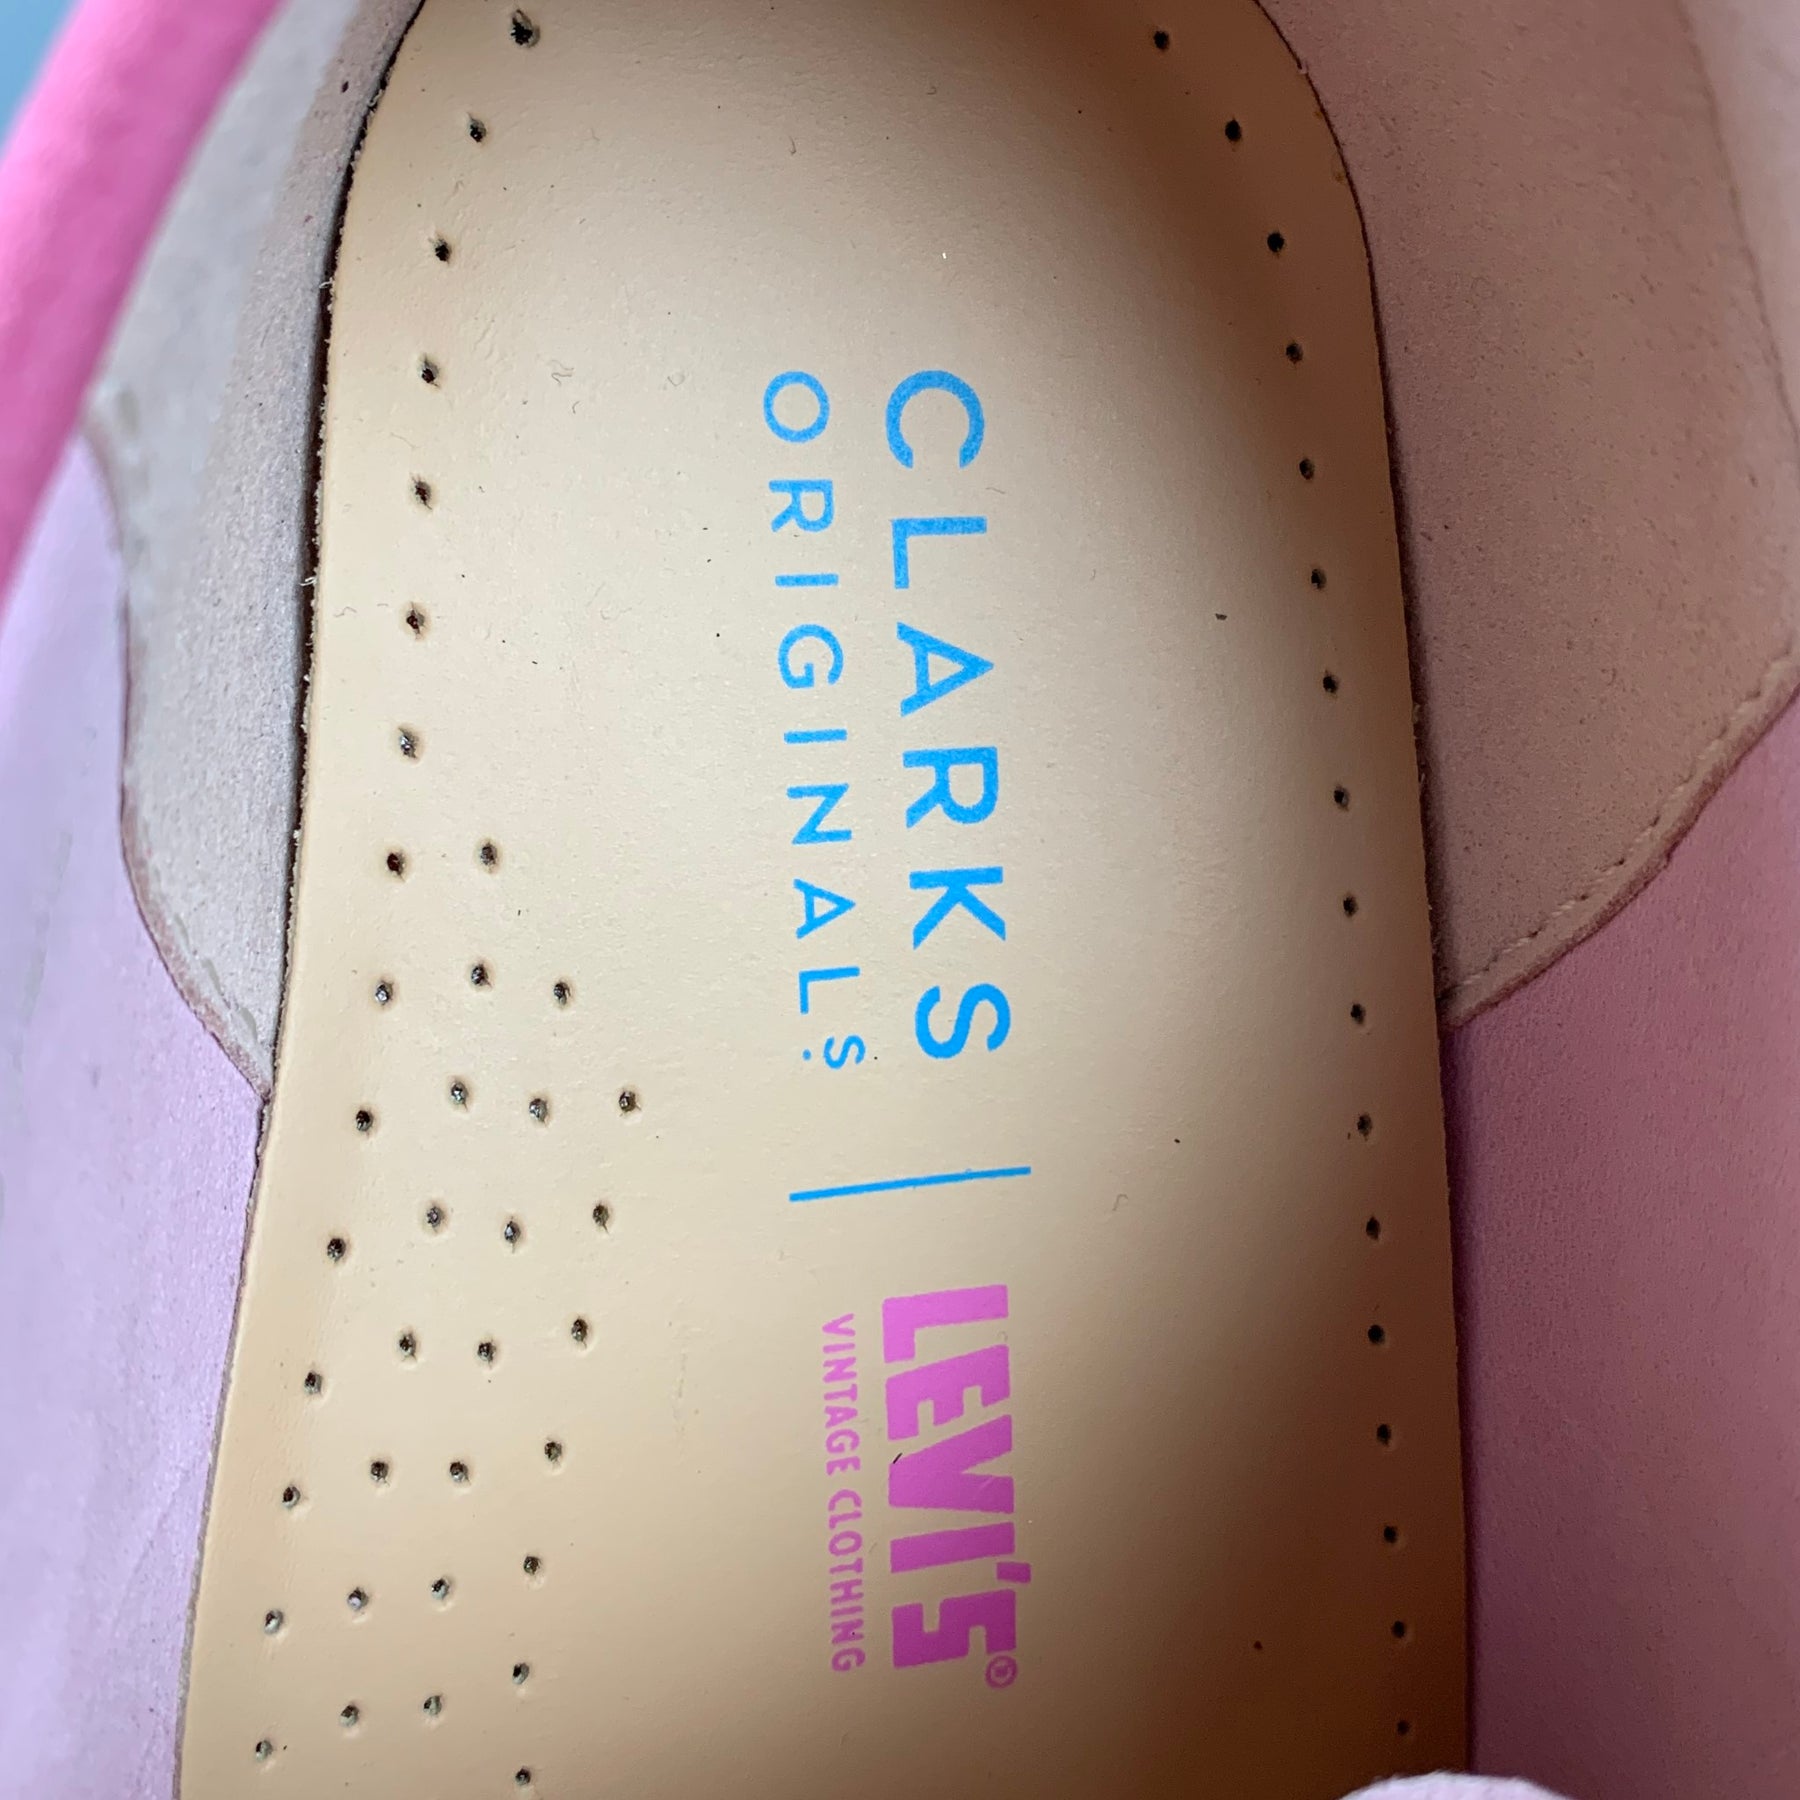 CLARKS x LEVI'S VINTAGE Size 11 Pink Suede Desert Lace Up Shoes